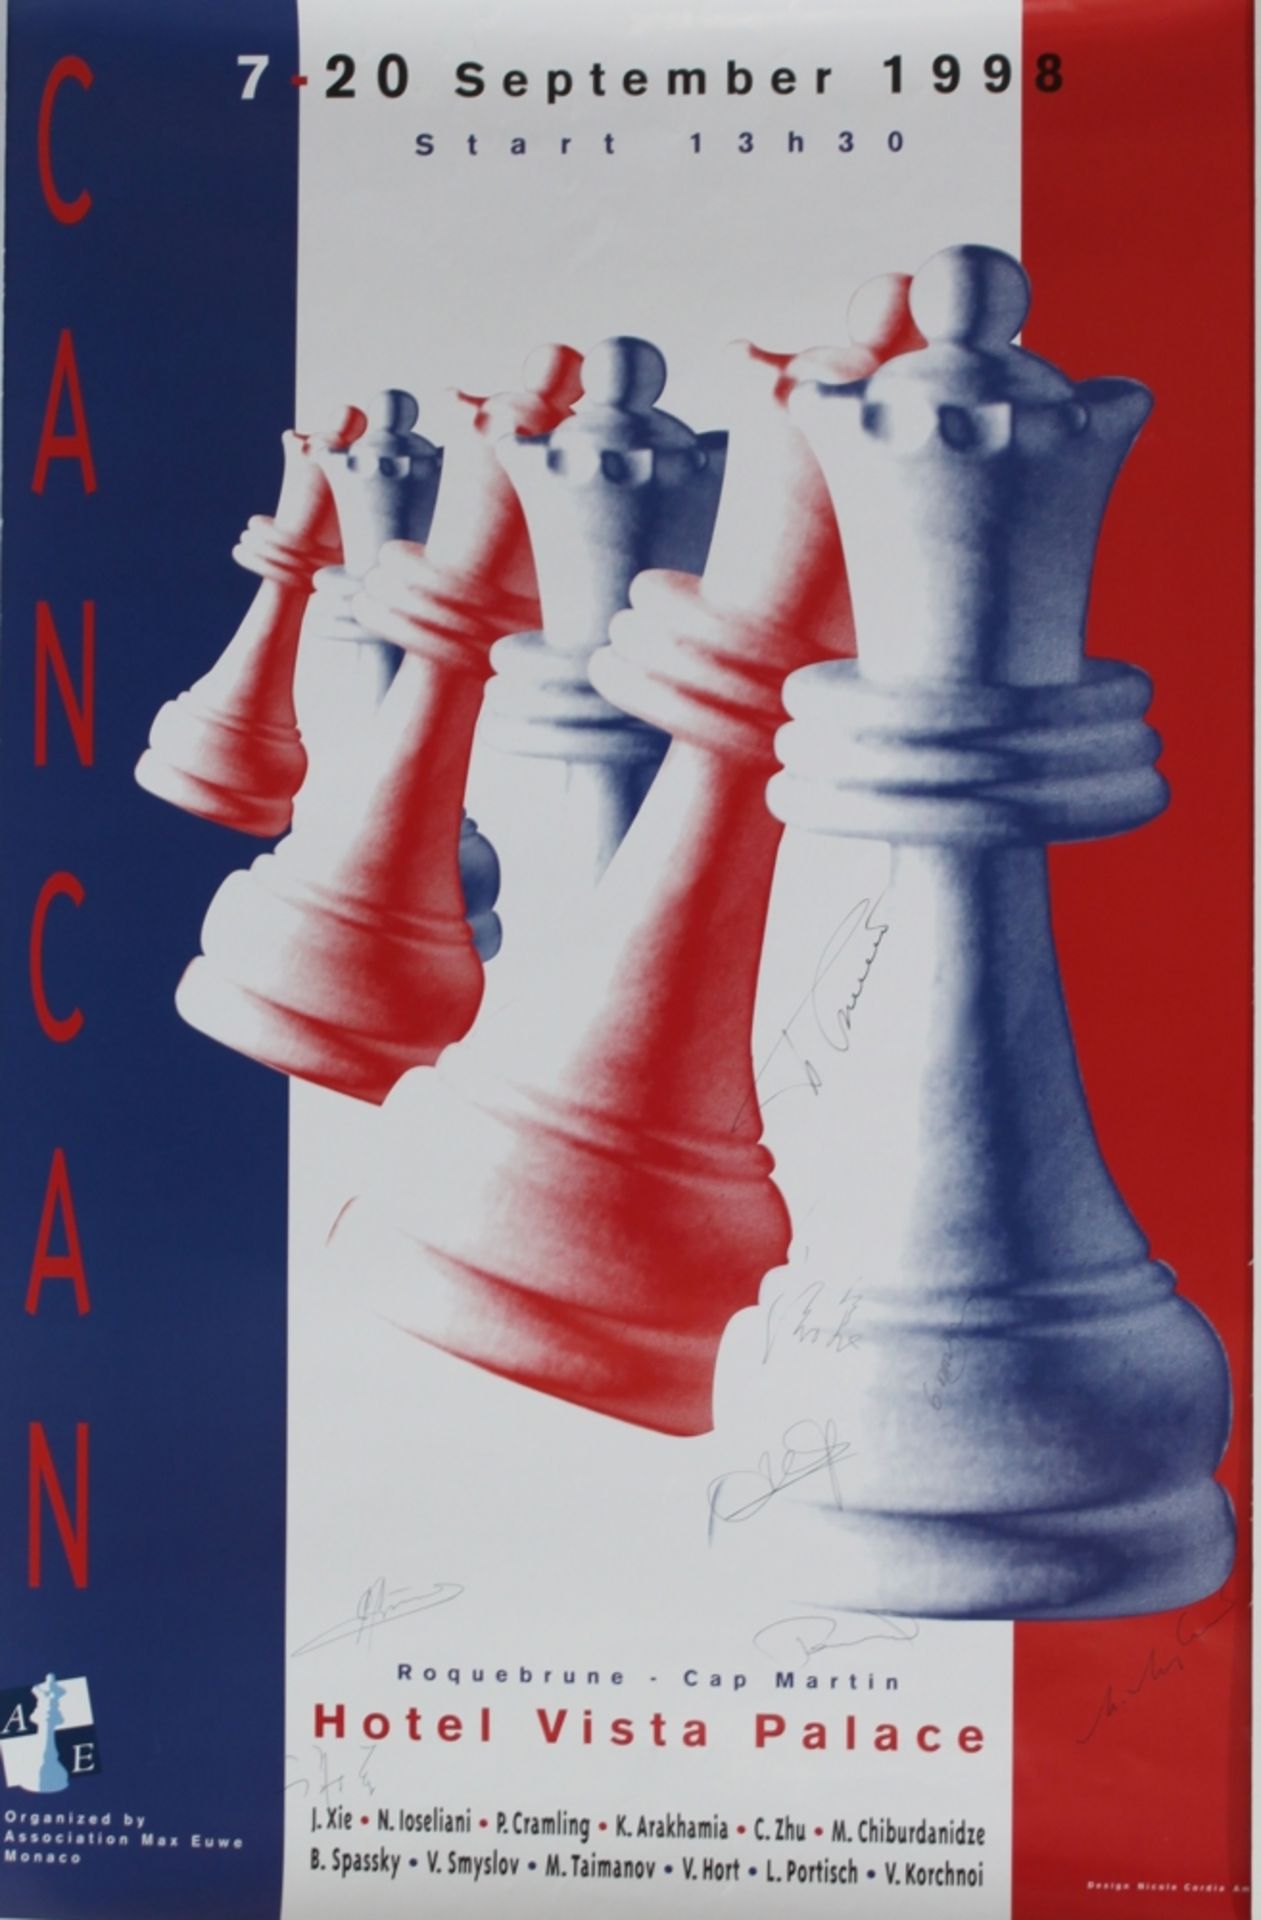 Roquebrune 1998. Cancan Chess Tournament 7 – 20 September 1998. Plakat mit Schachfigurenmotiv, ca.